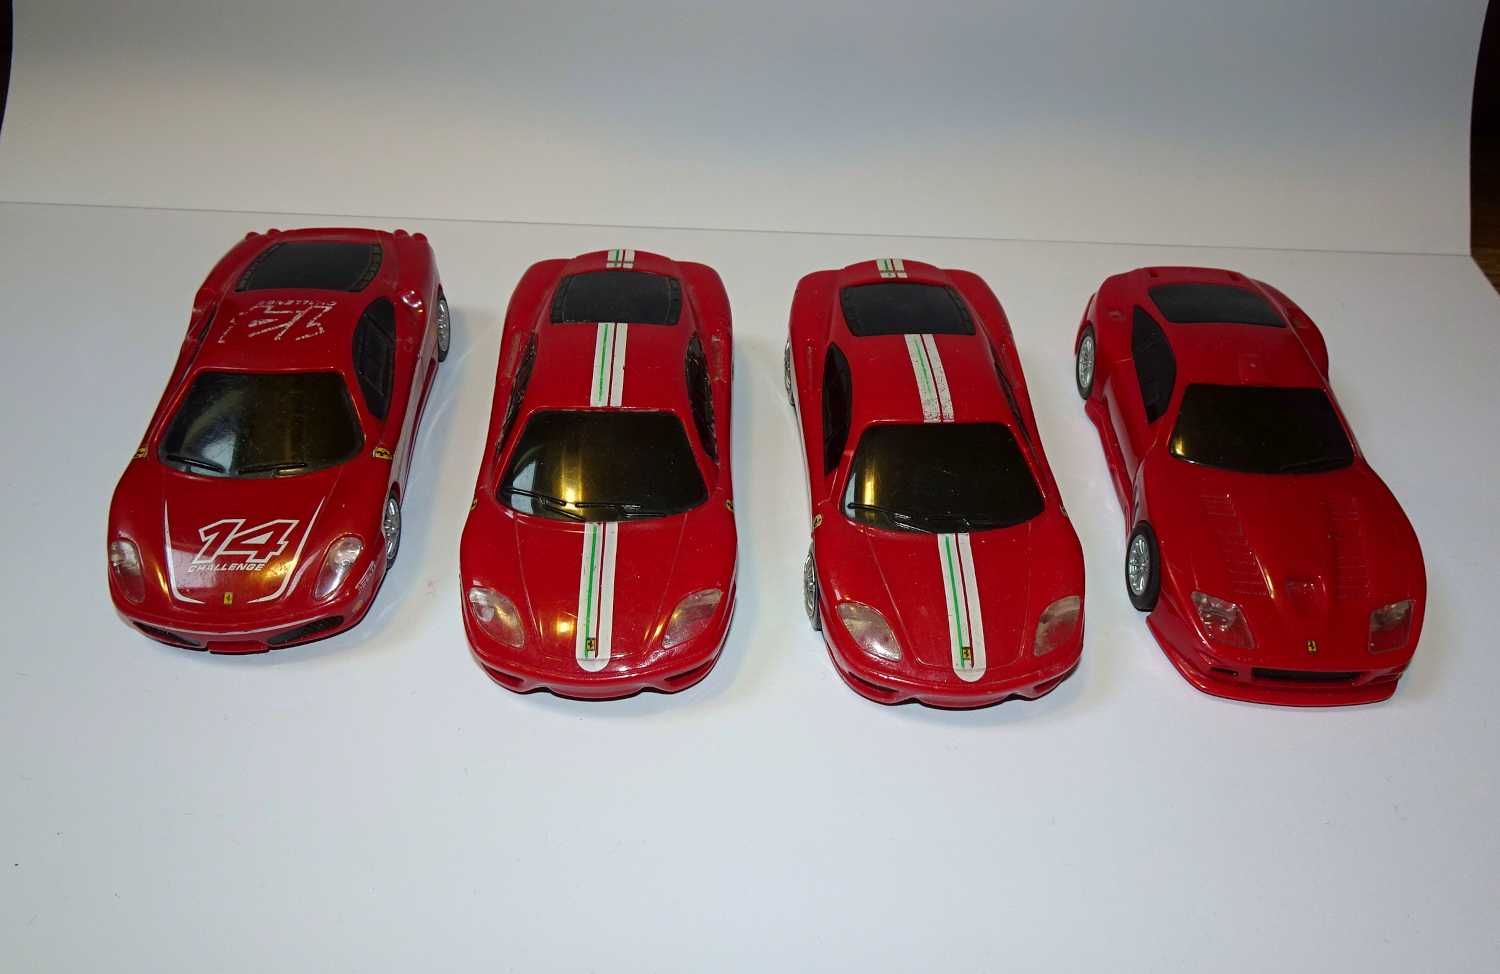 4 samochody Ferrari 1:38 modele F430, 575 GTC, 360